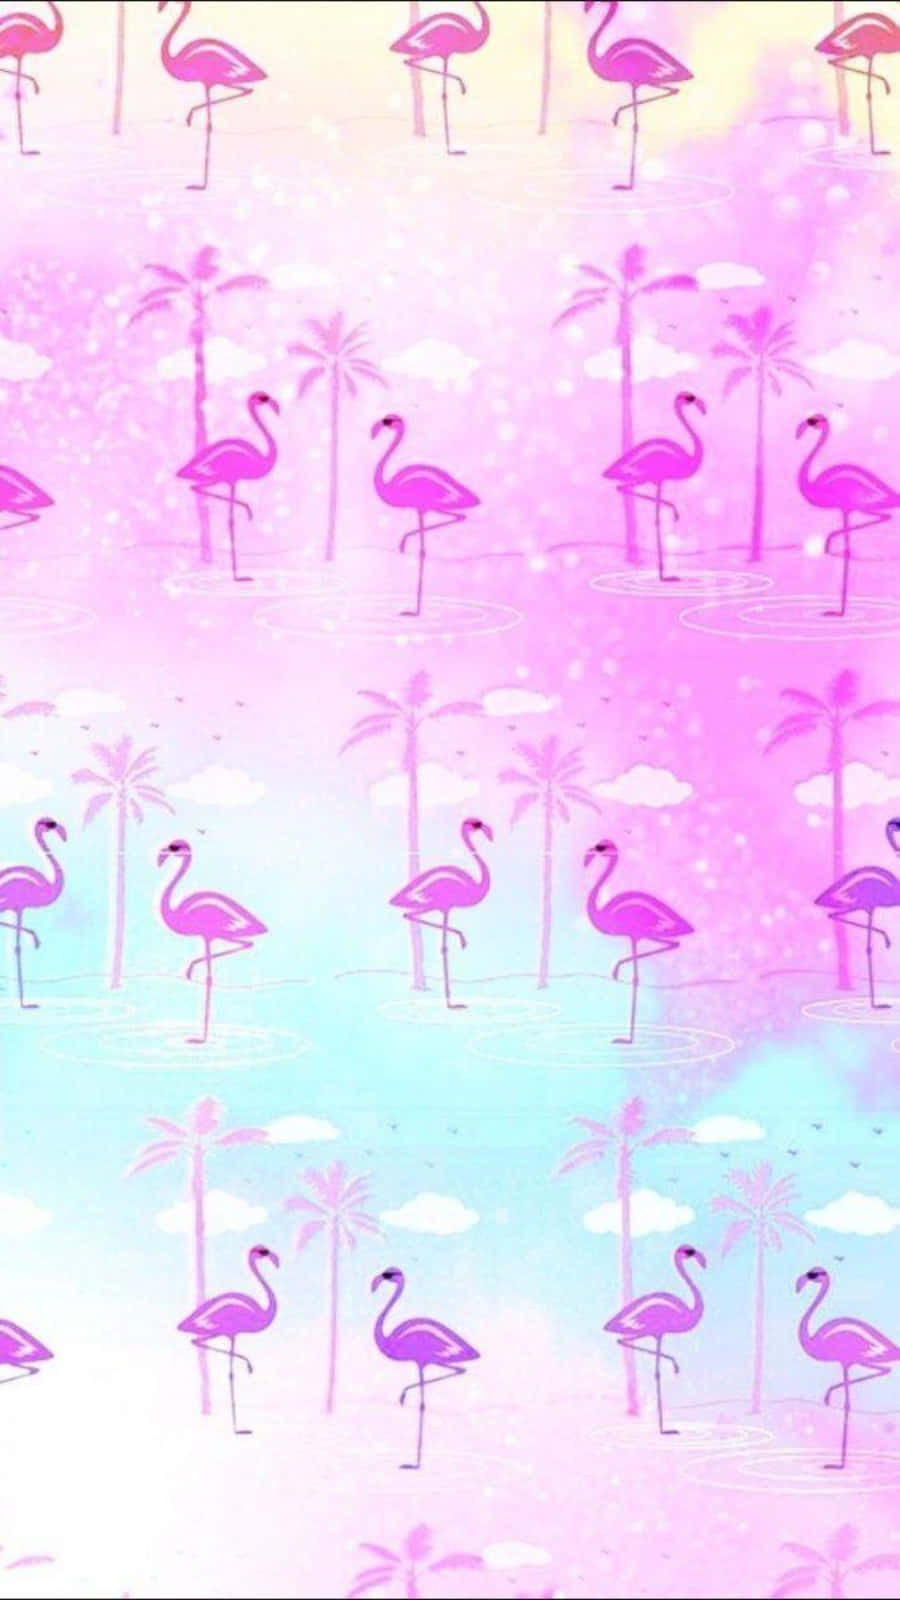 A Flock of Graceful Pink Flamingos Wallpaper